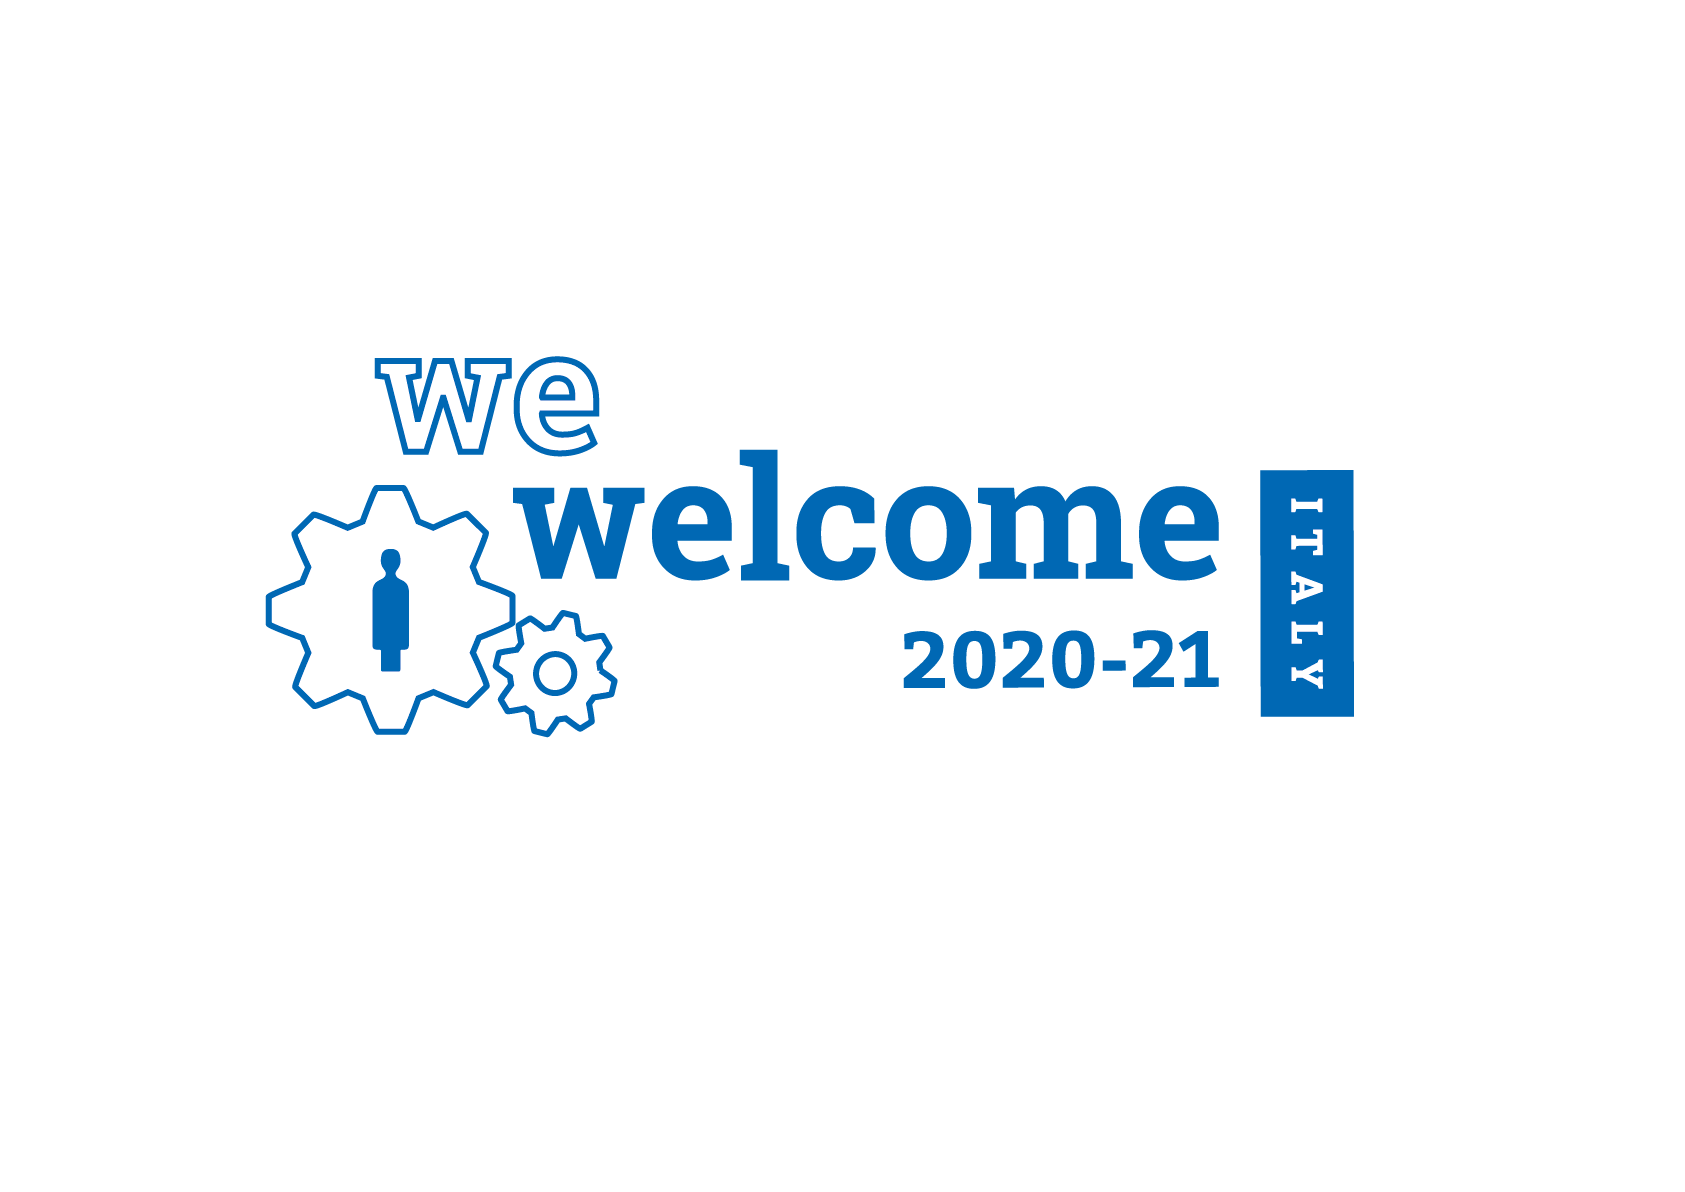 Riconoscimento “Welcome. Working for refugee integration” per l'anno 2020-2021